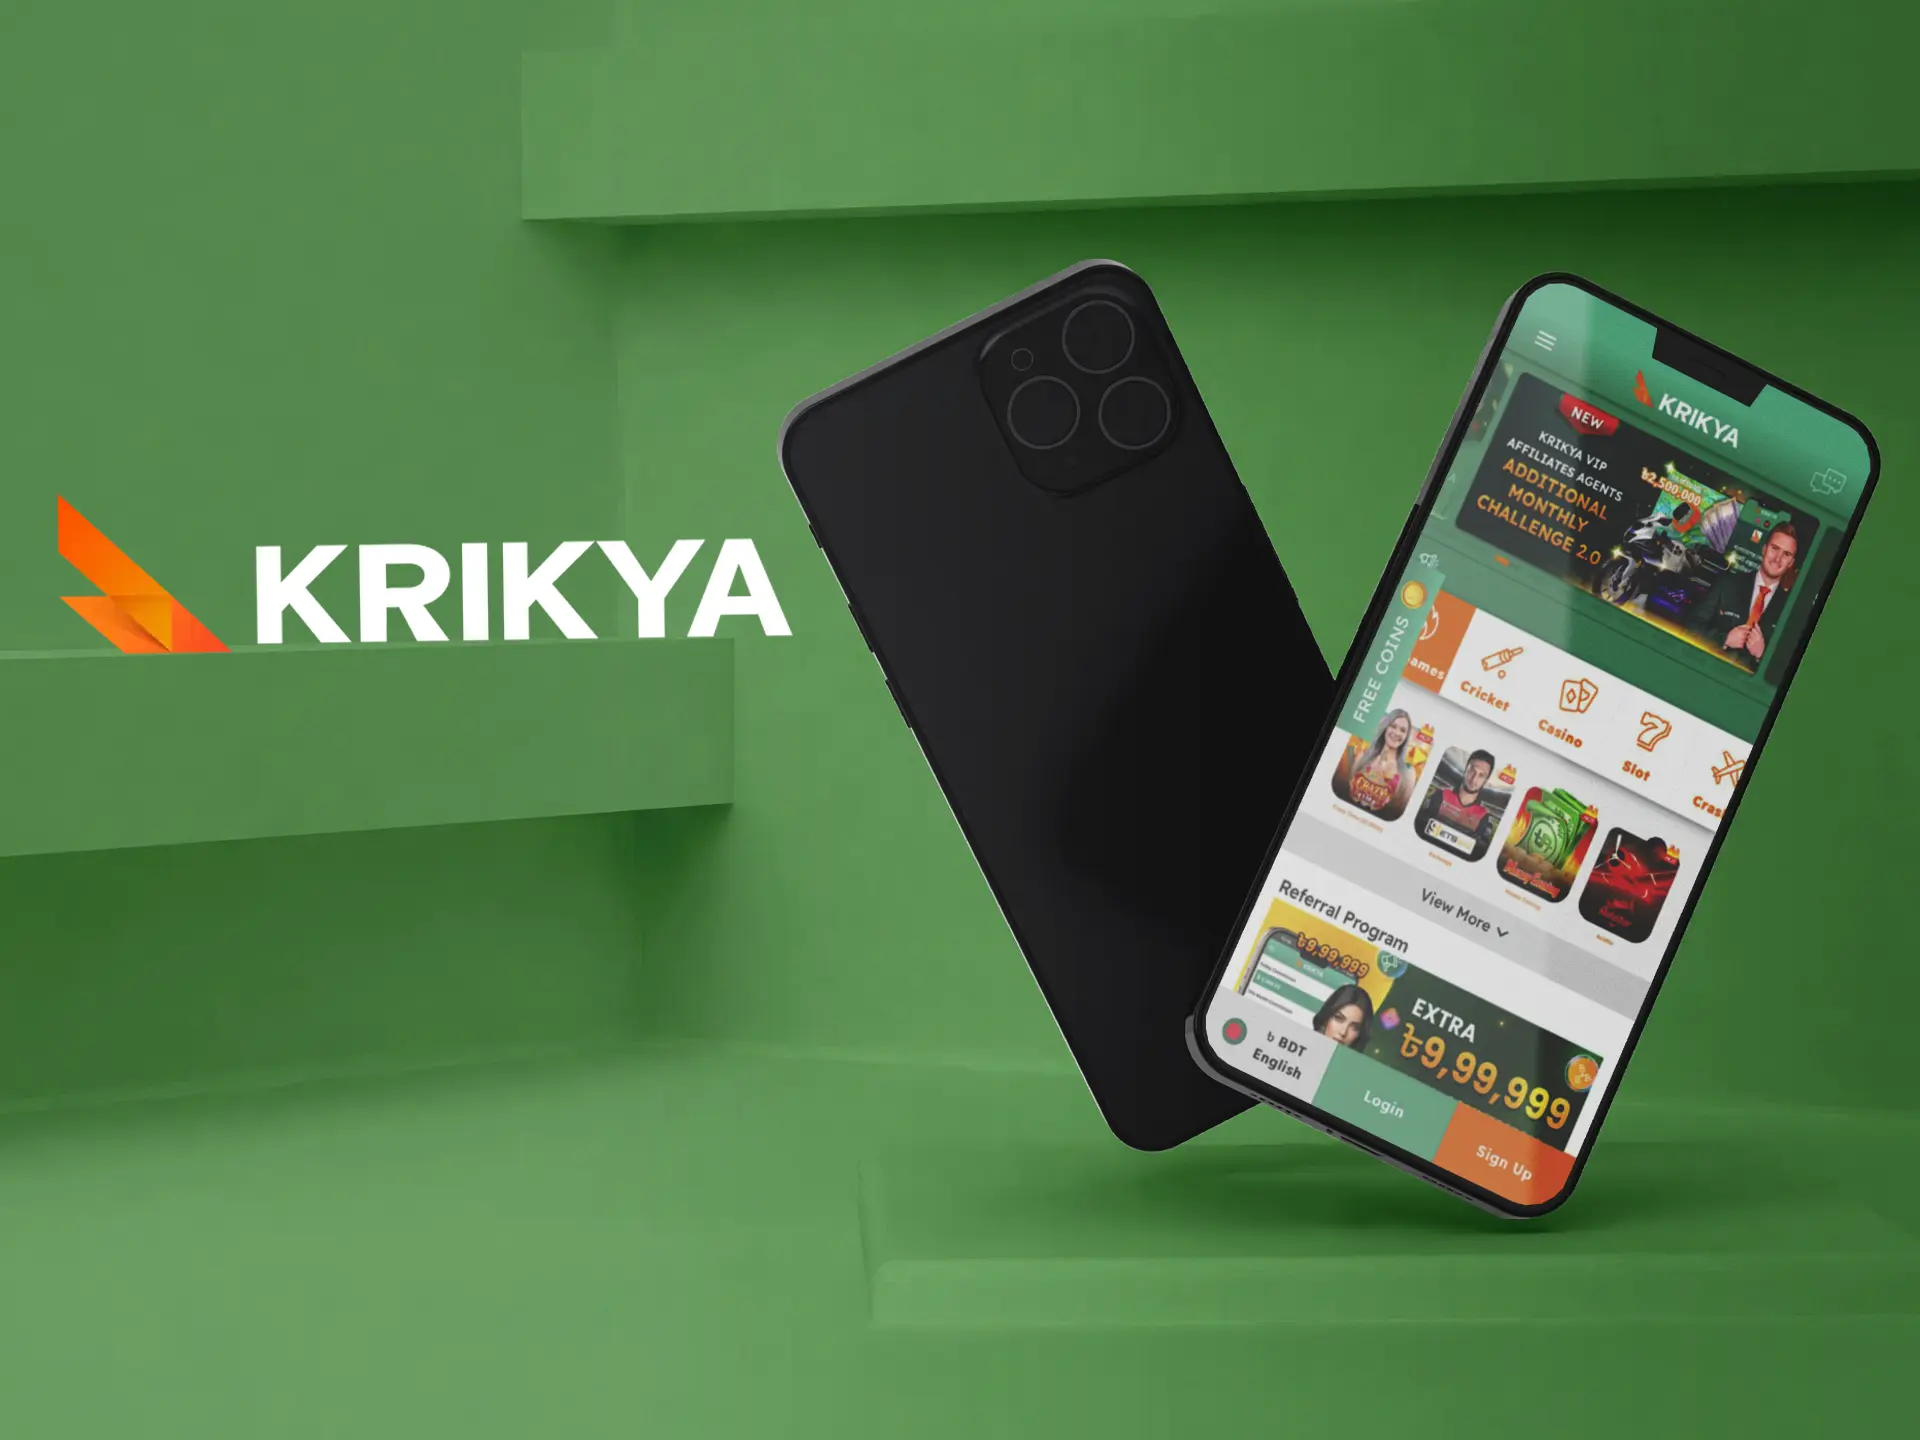 Use the Krikya app and get unprecedented bonuses.